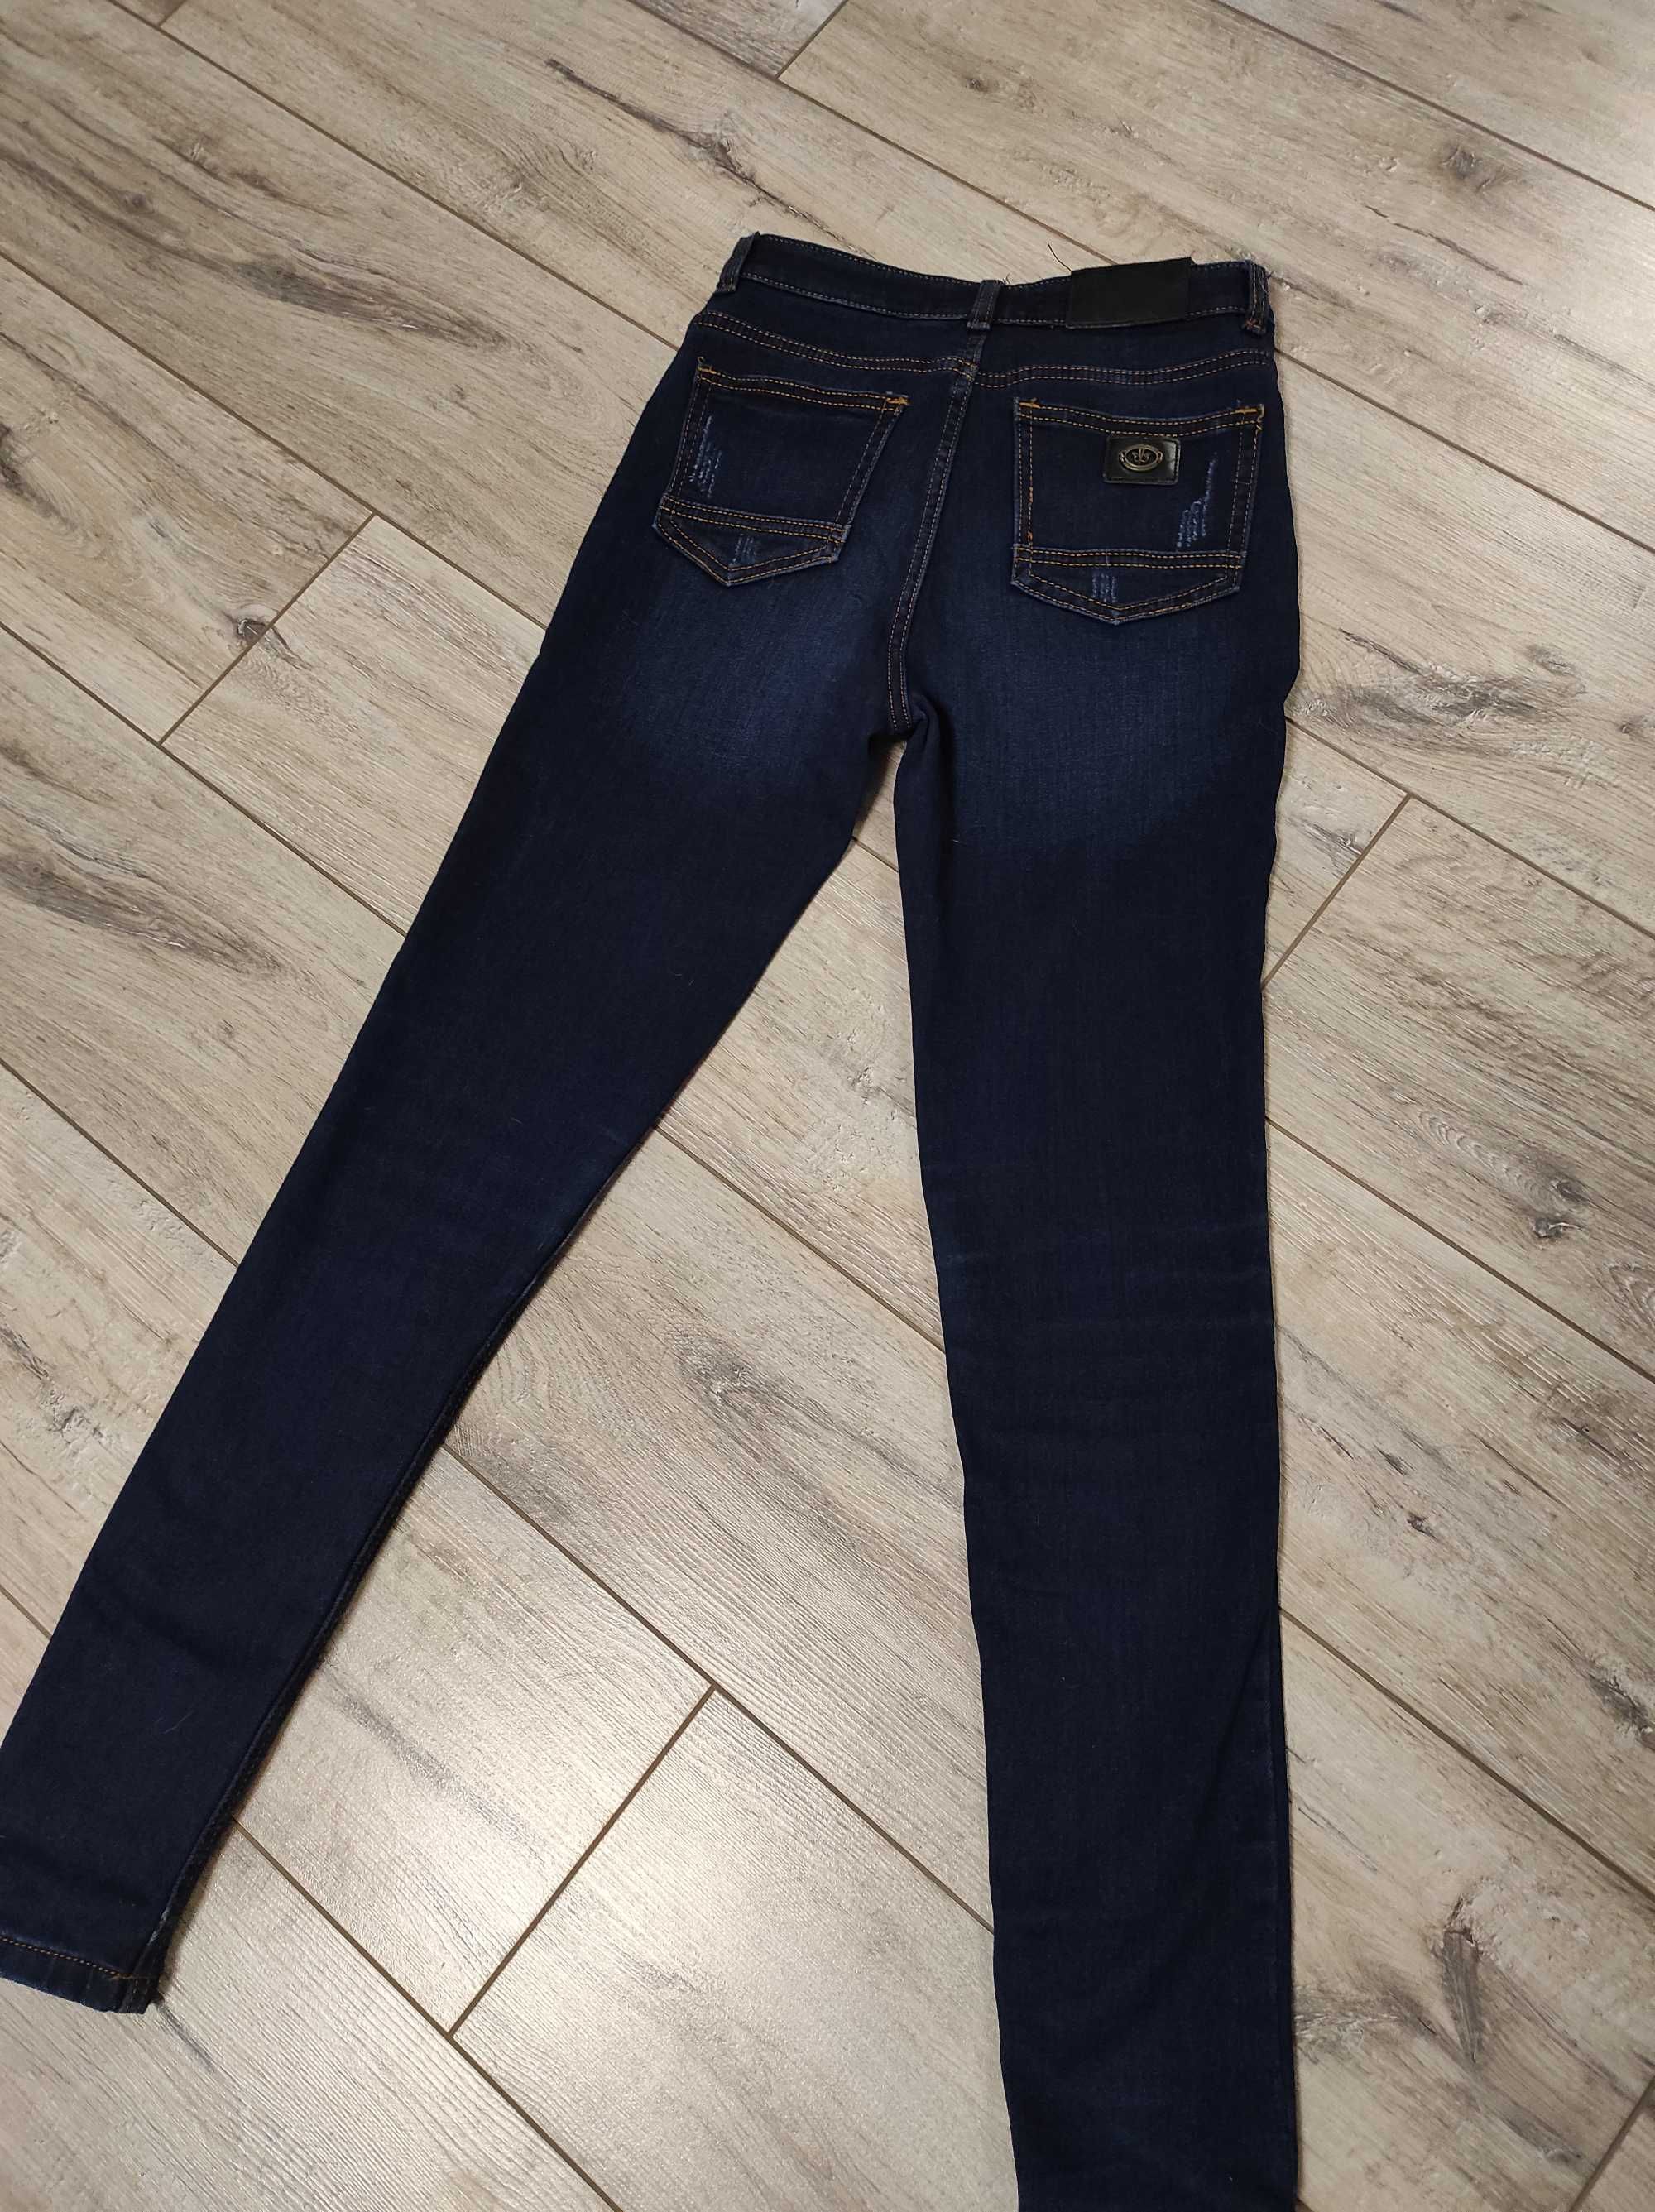 Женские утеплённые джинсы-легинсы Relucky